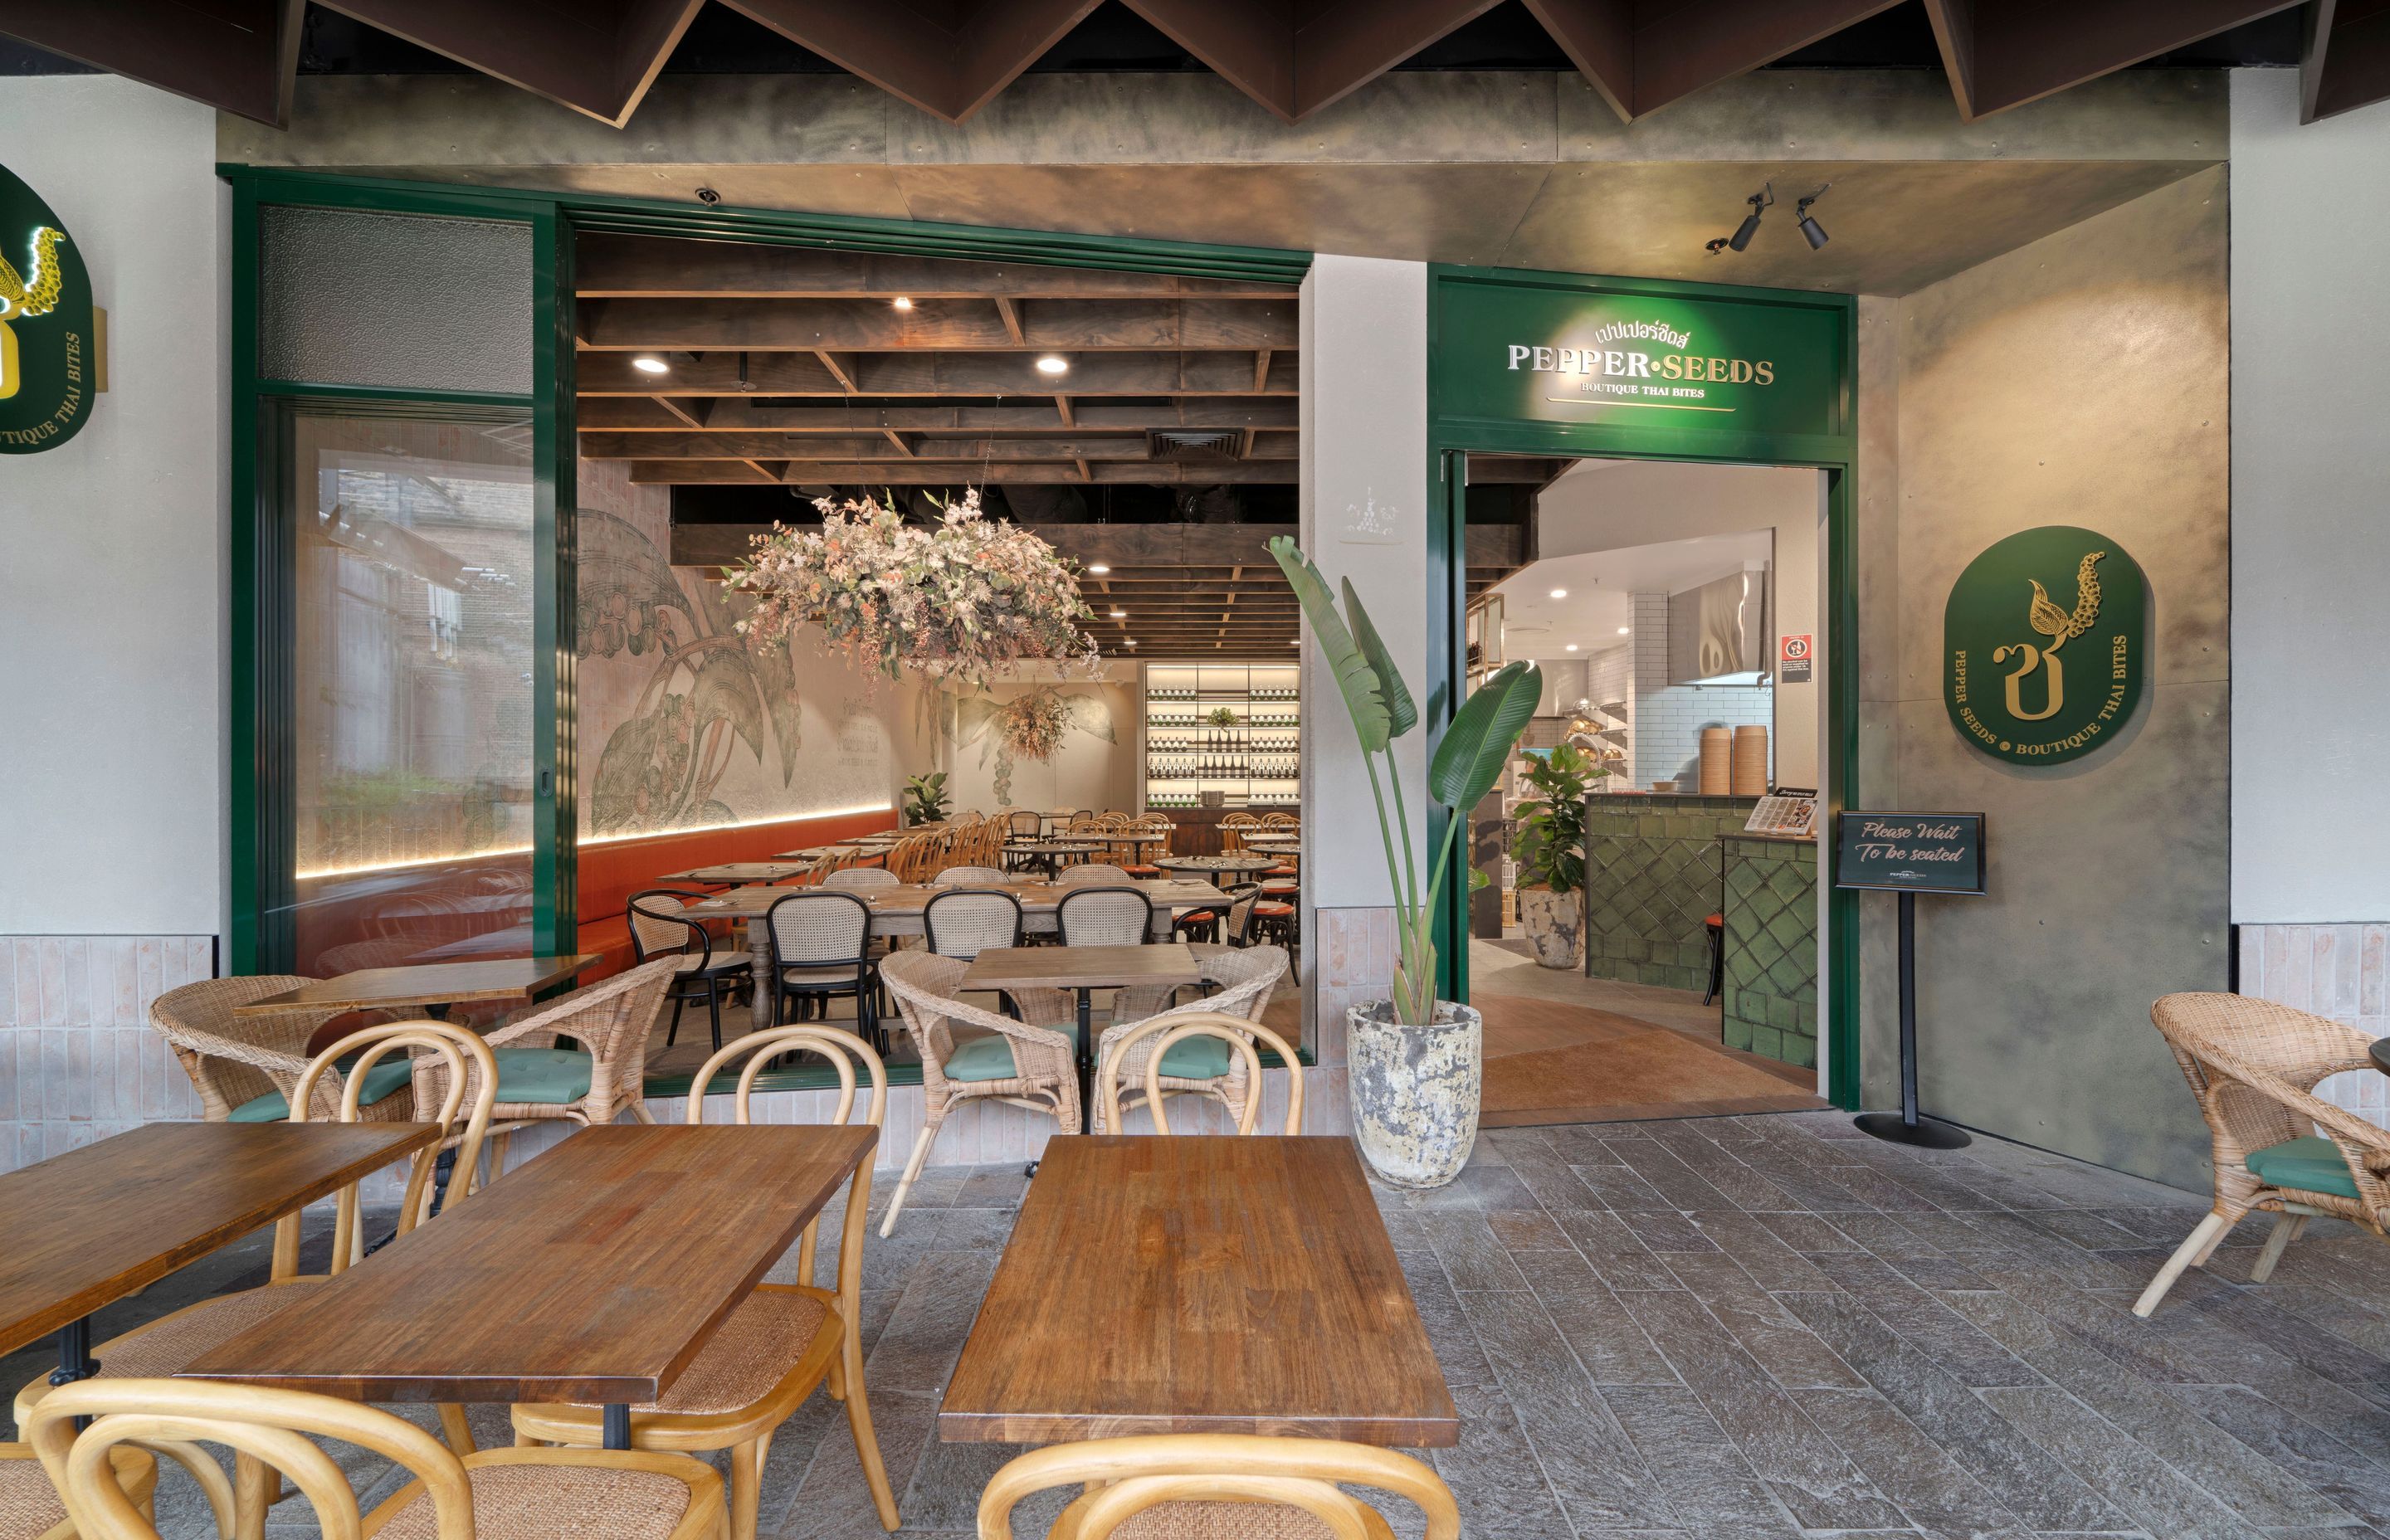 ##^^Be Creative Studio - Pepperseeds Restaurant Renovation